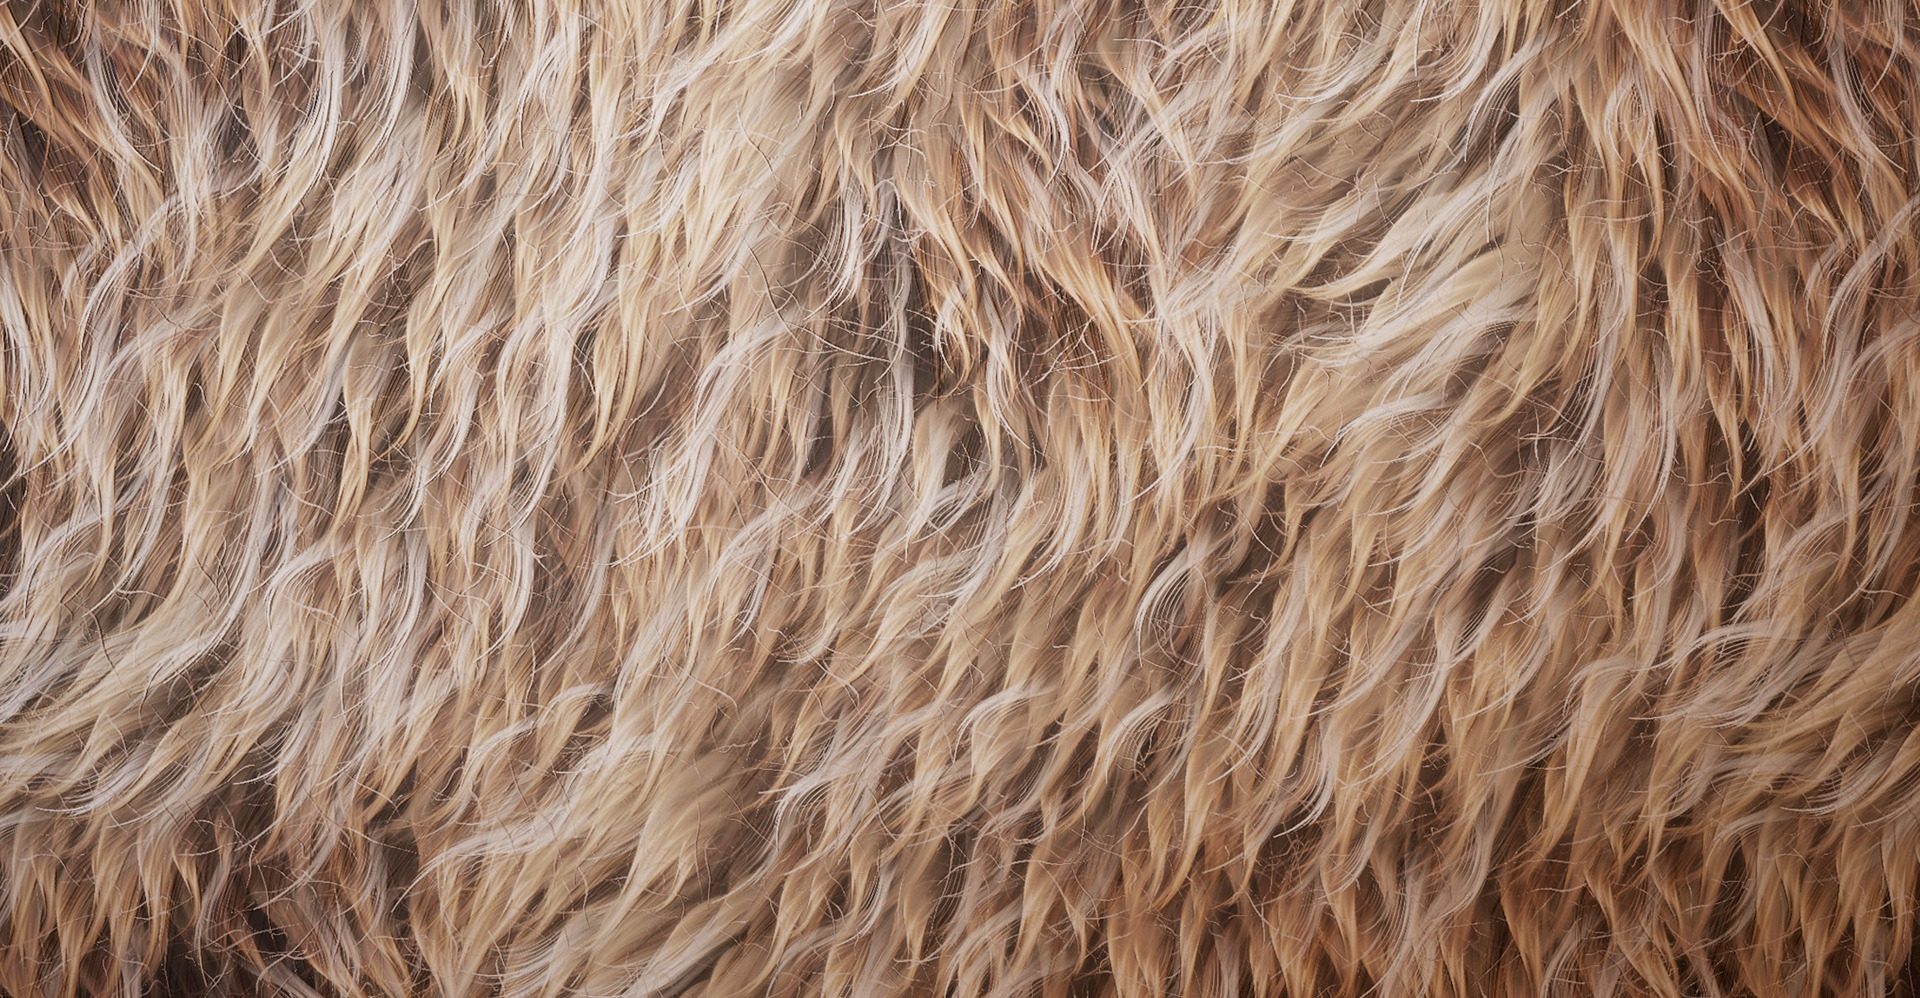 Fur material substance